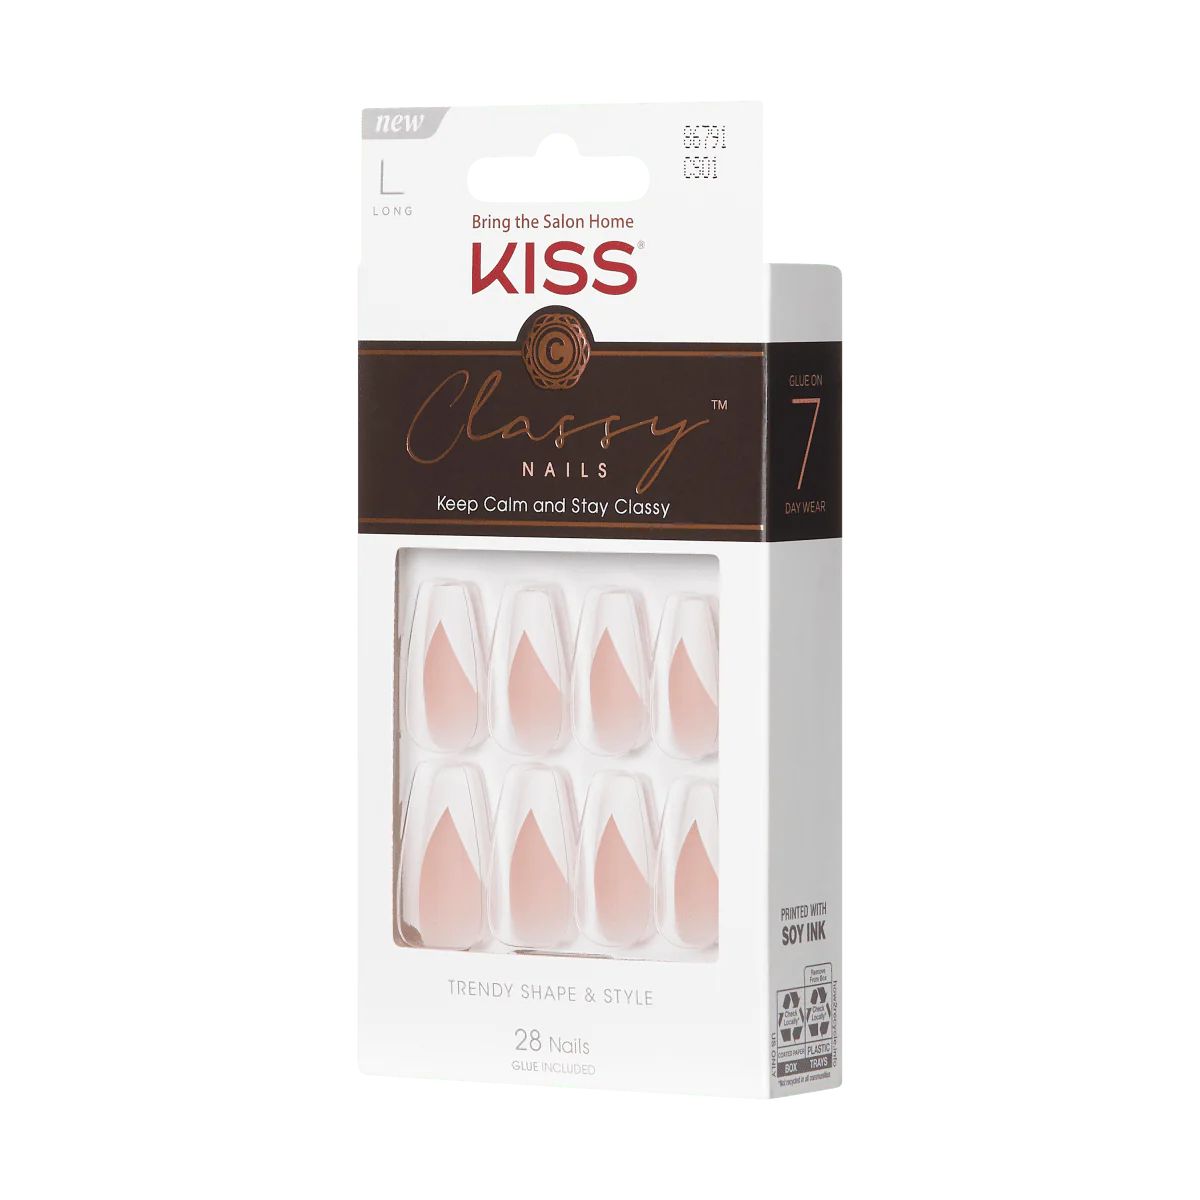 KISS Classy Nails - You're Gorgeous | KISS, imPRESS, JOAH